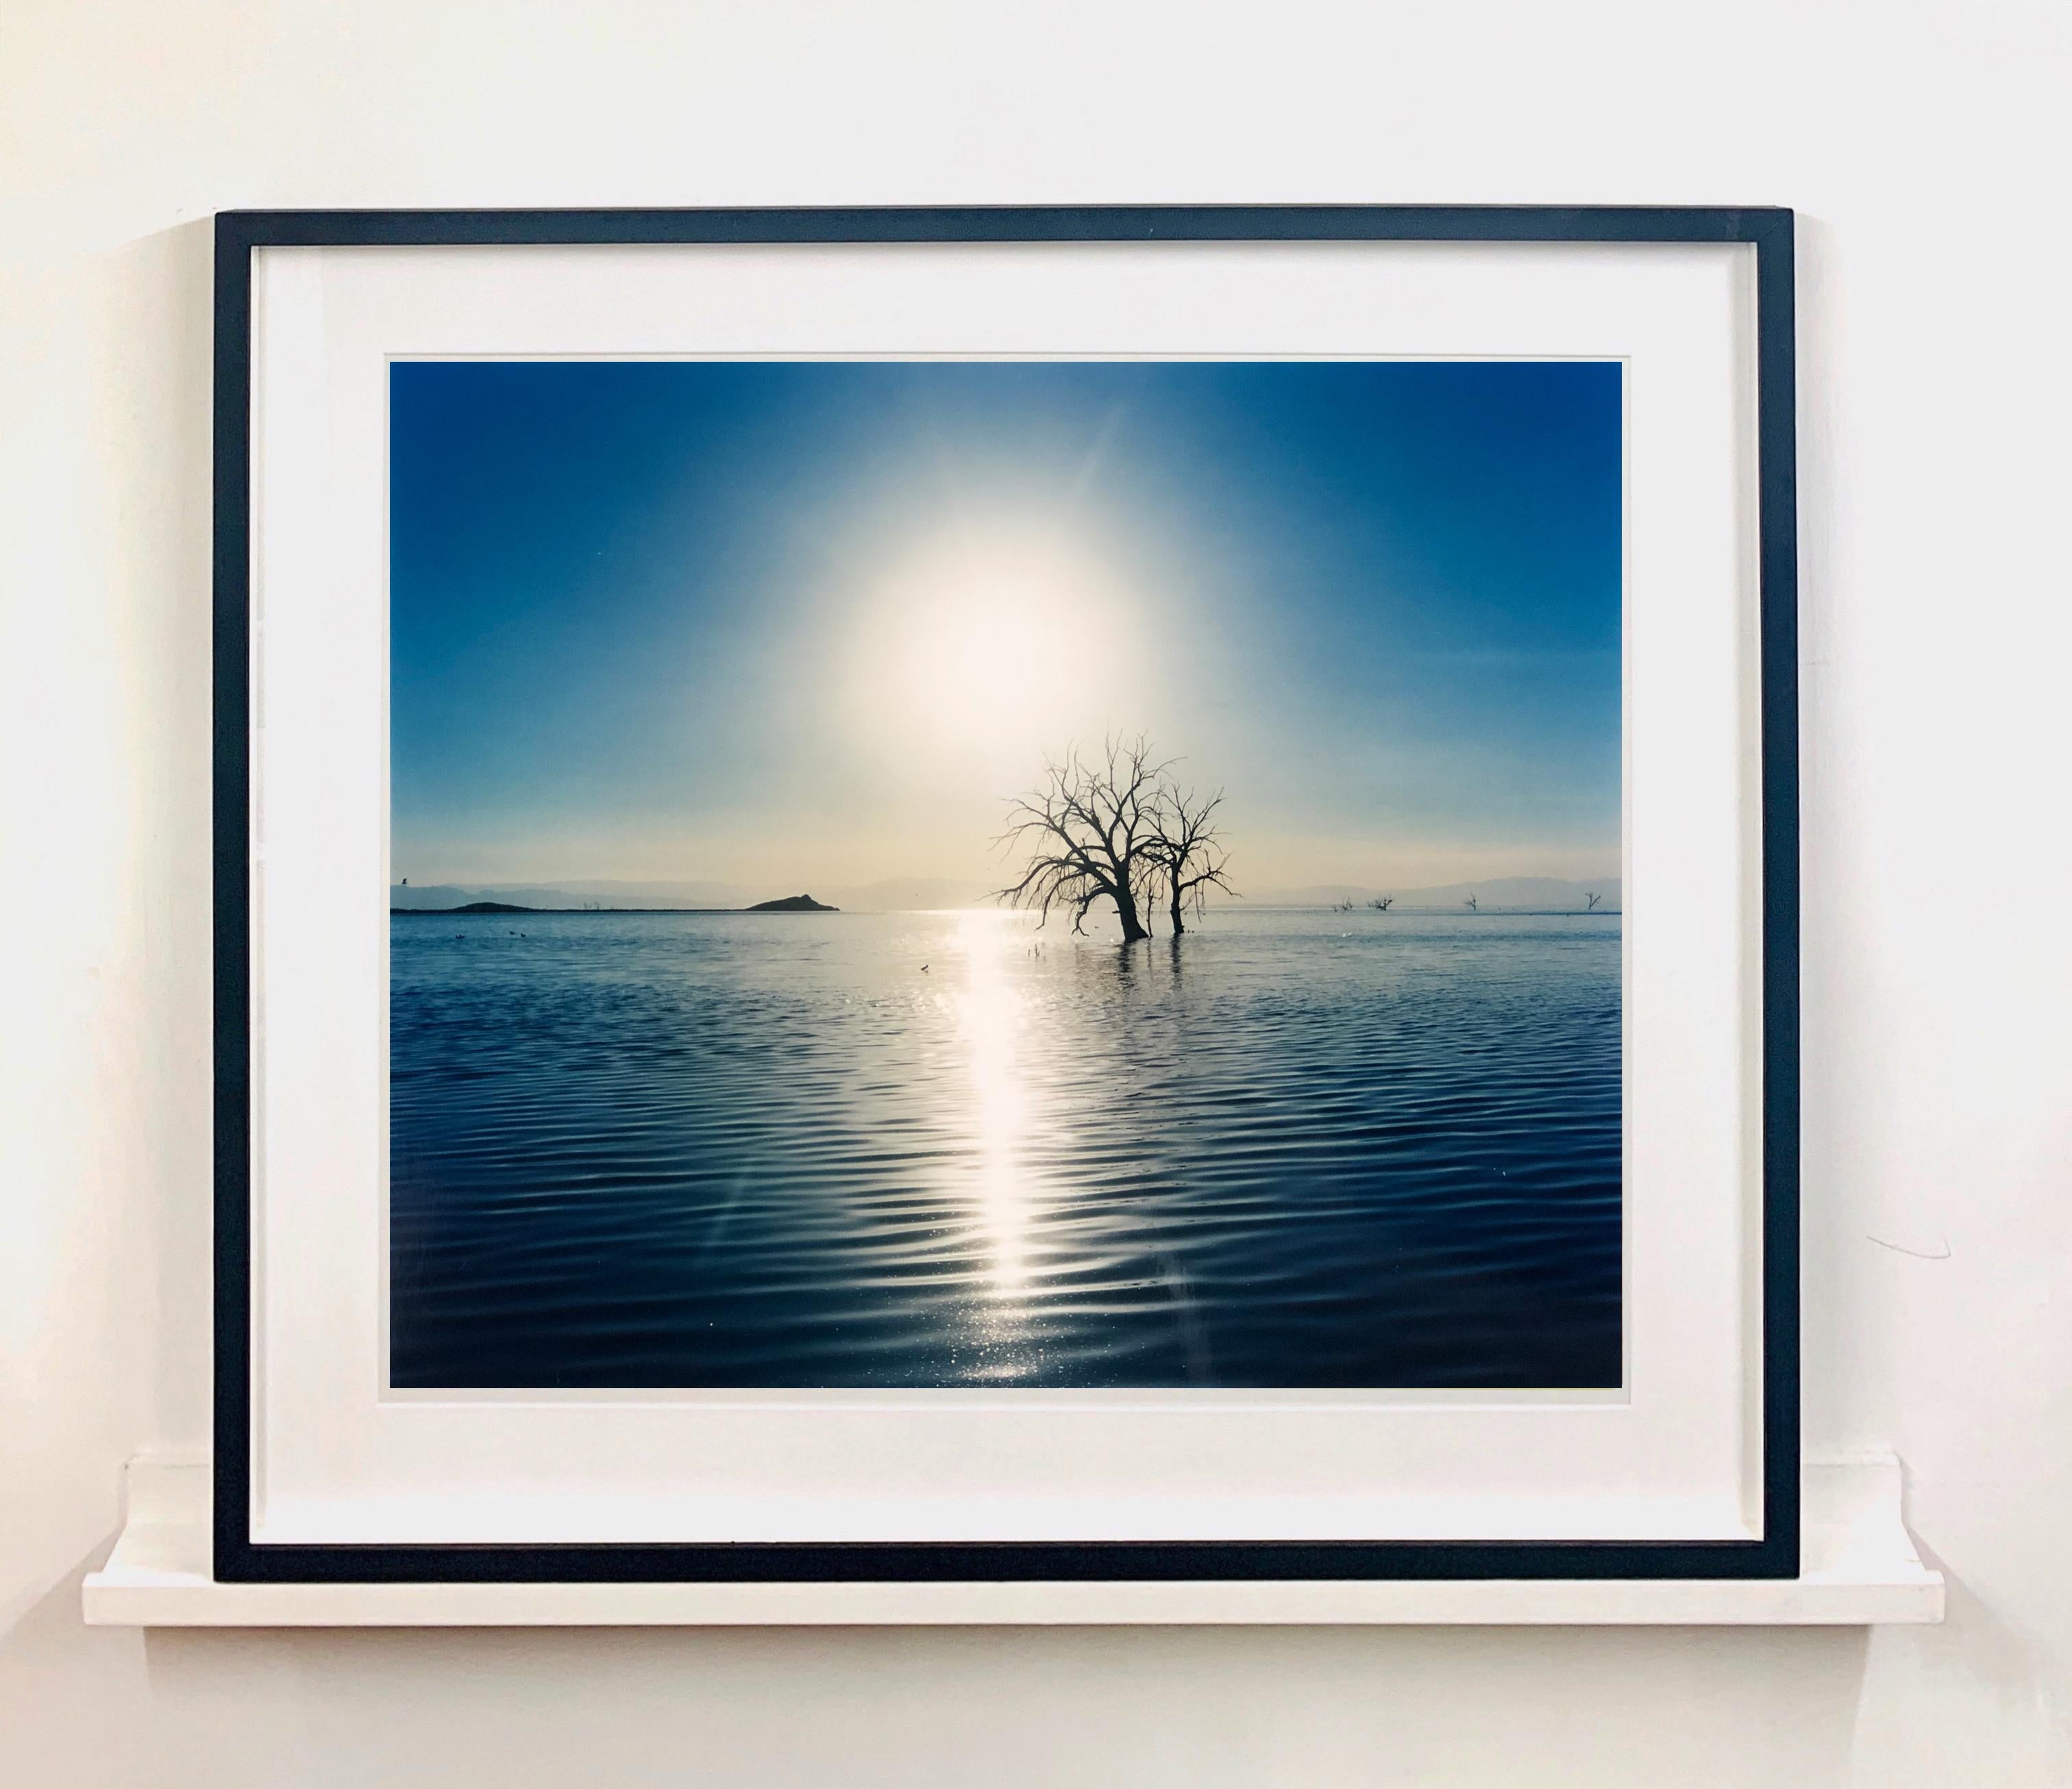 Towards Rock Hill, Bombay Beach, Salton Sea, California - Waterscape Photography For Sale 1